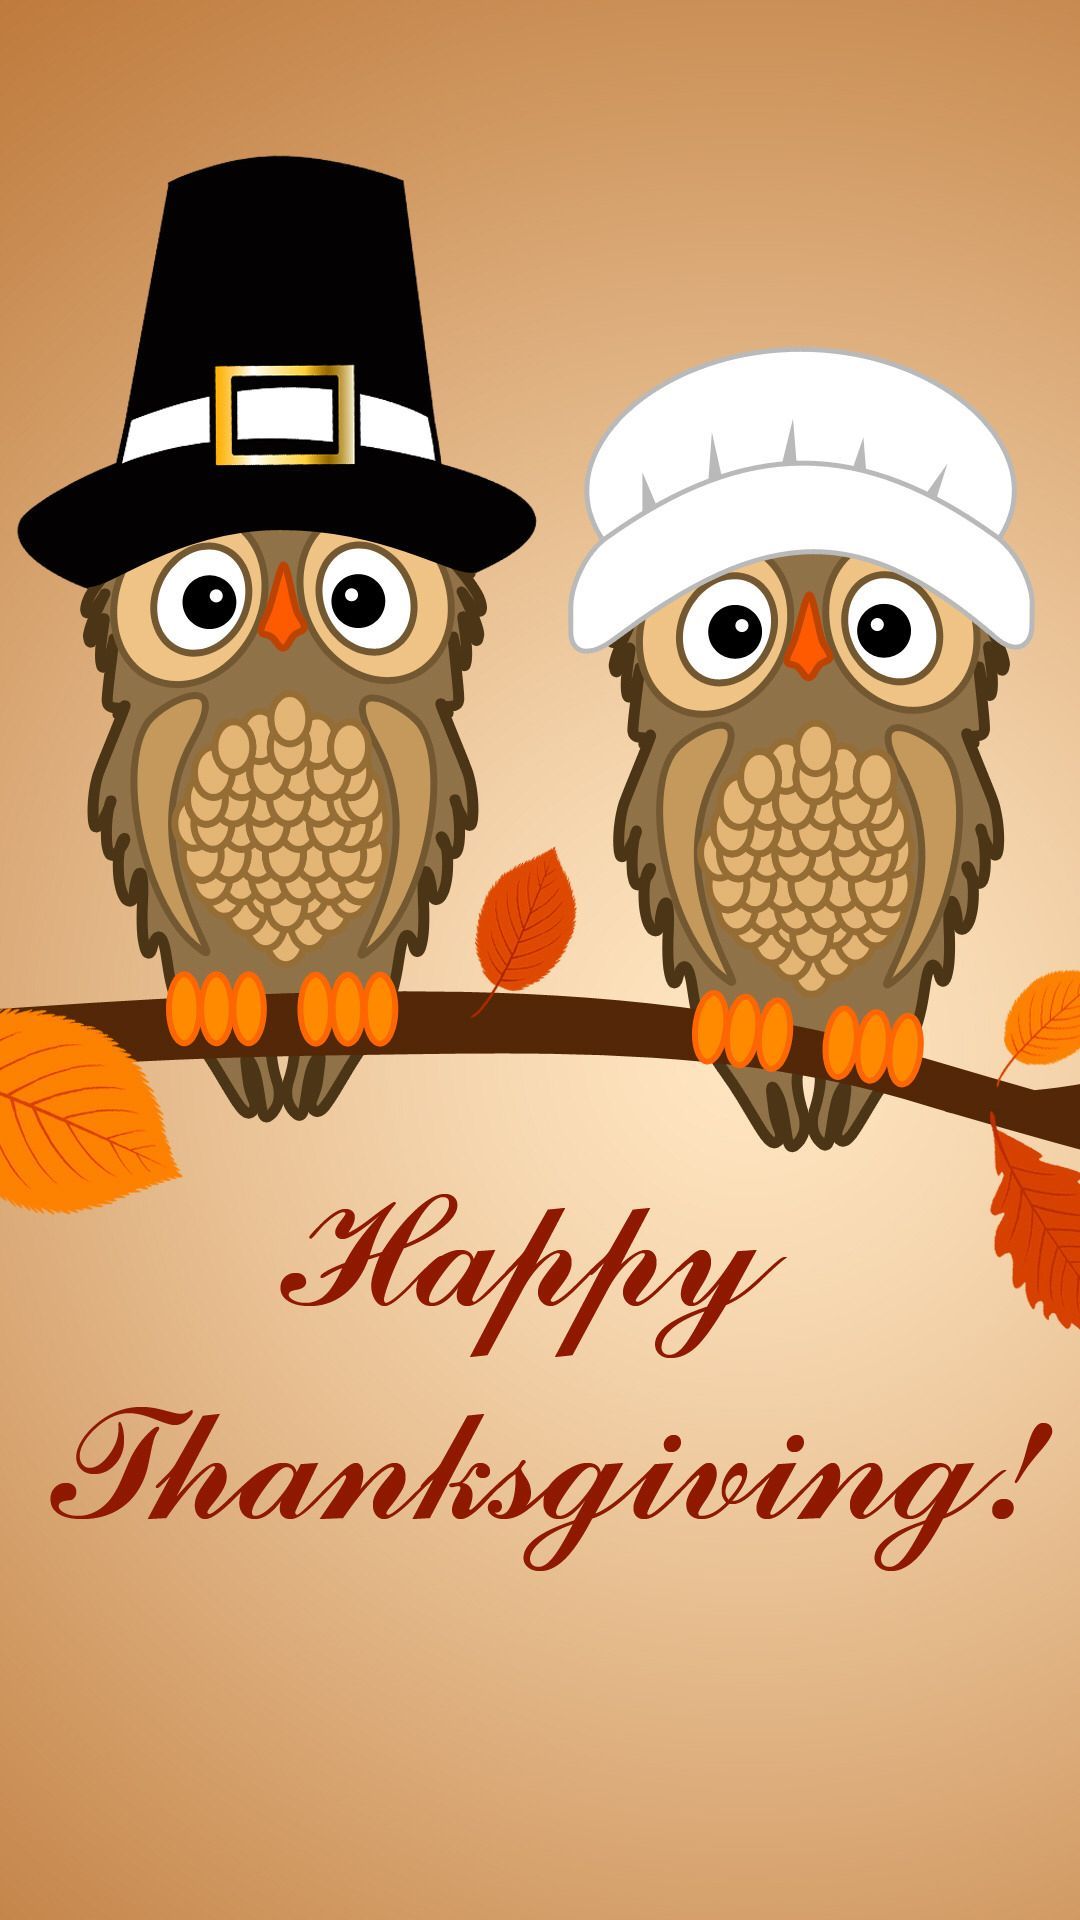 Owl Pilgrims. Happy thanksgiving wallpaper, Thanksgiving greetings, Thanksgiving owl